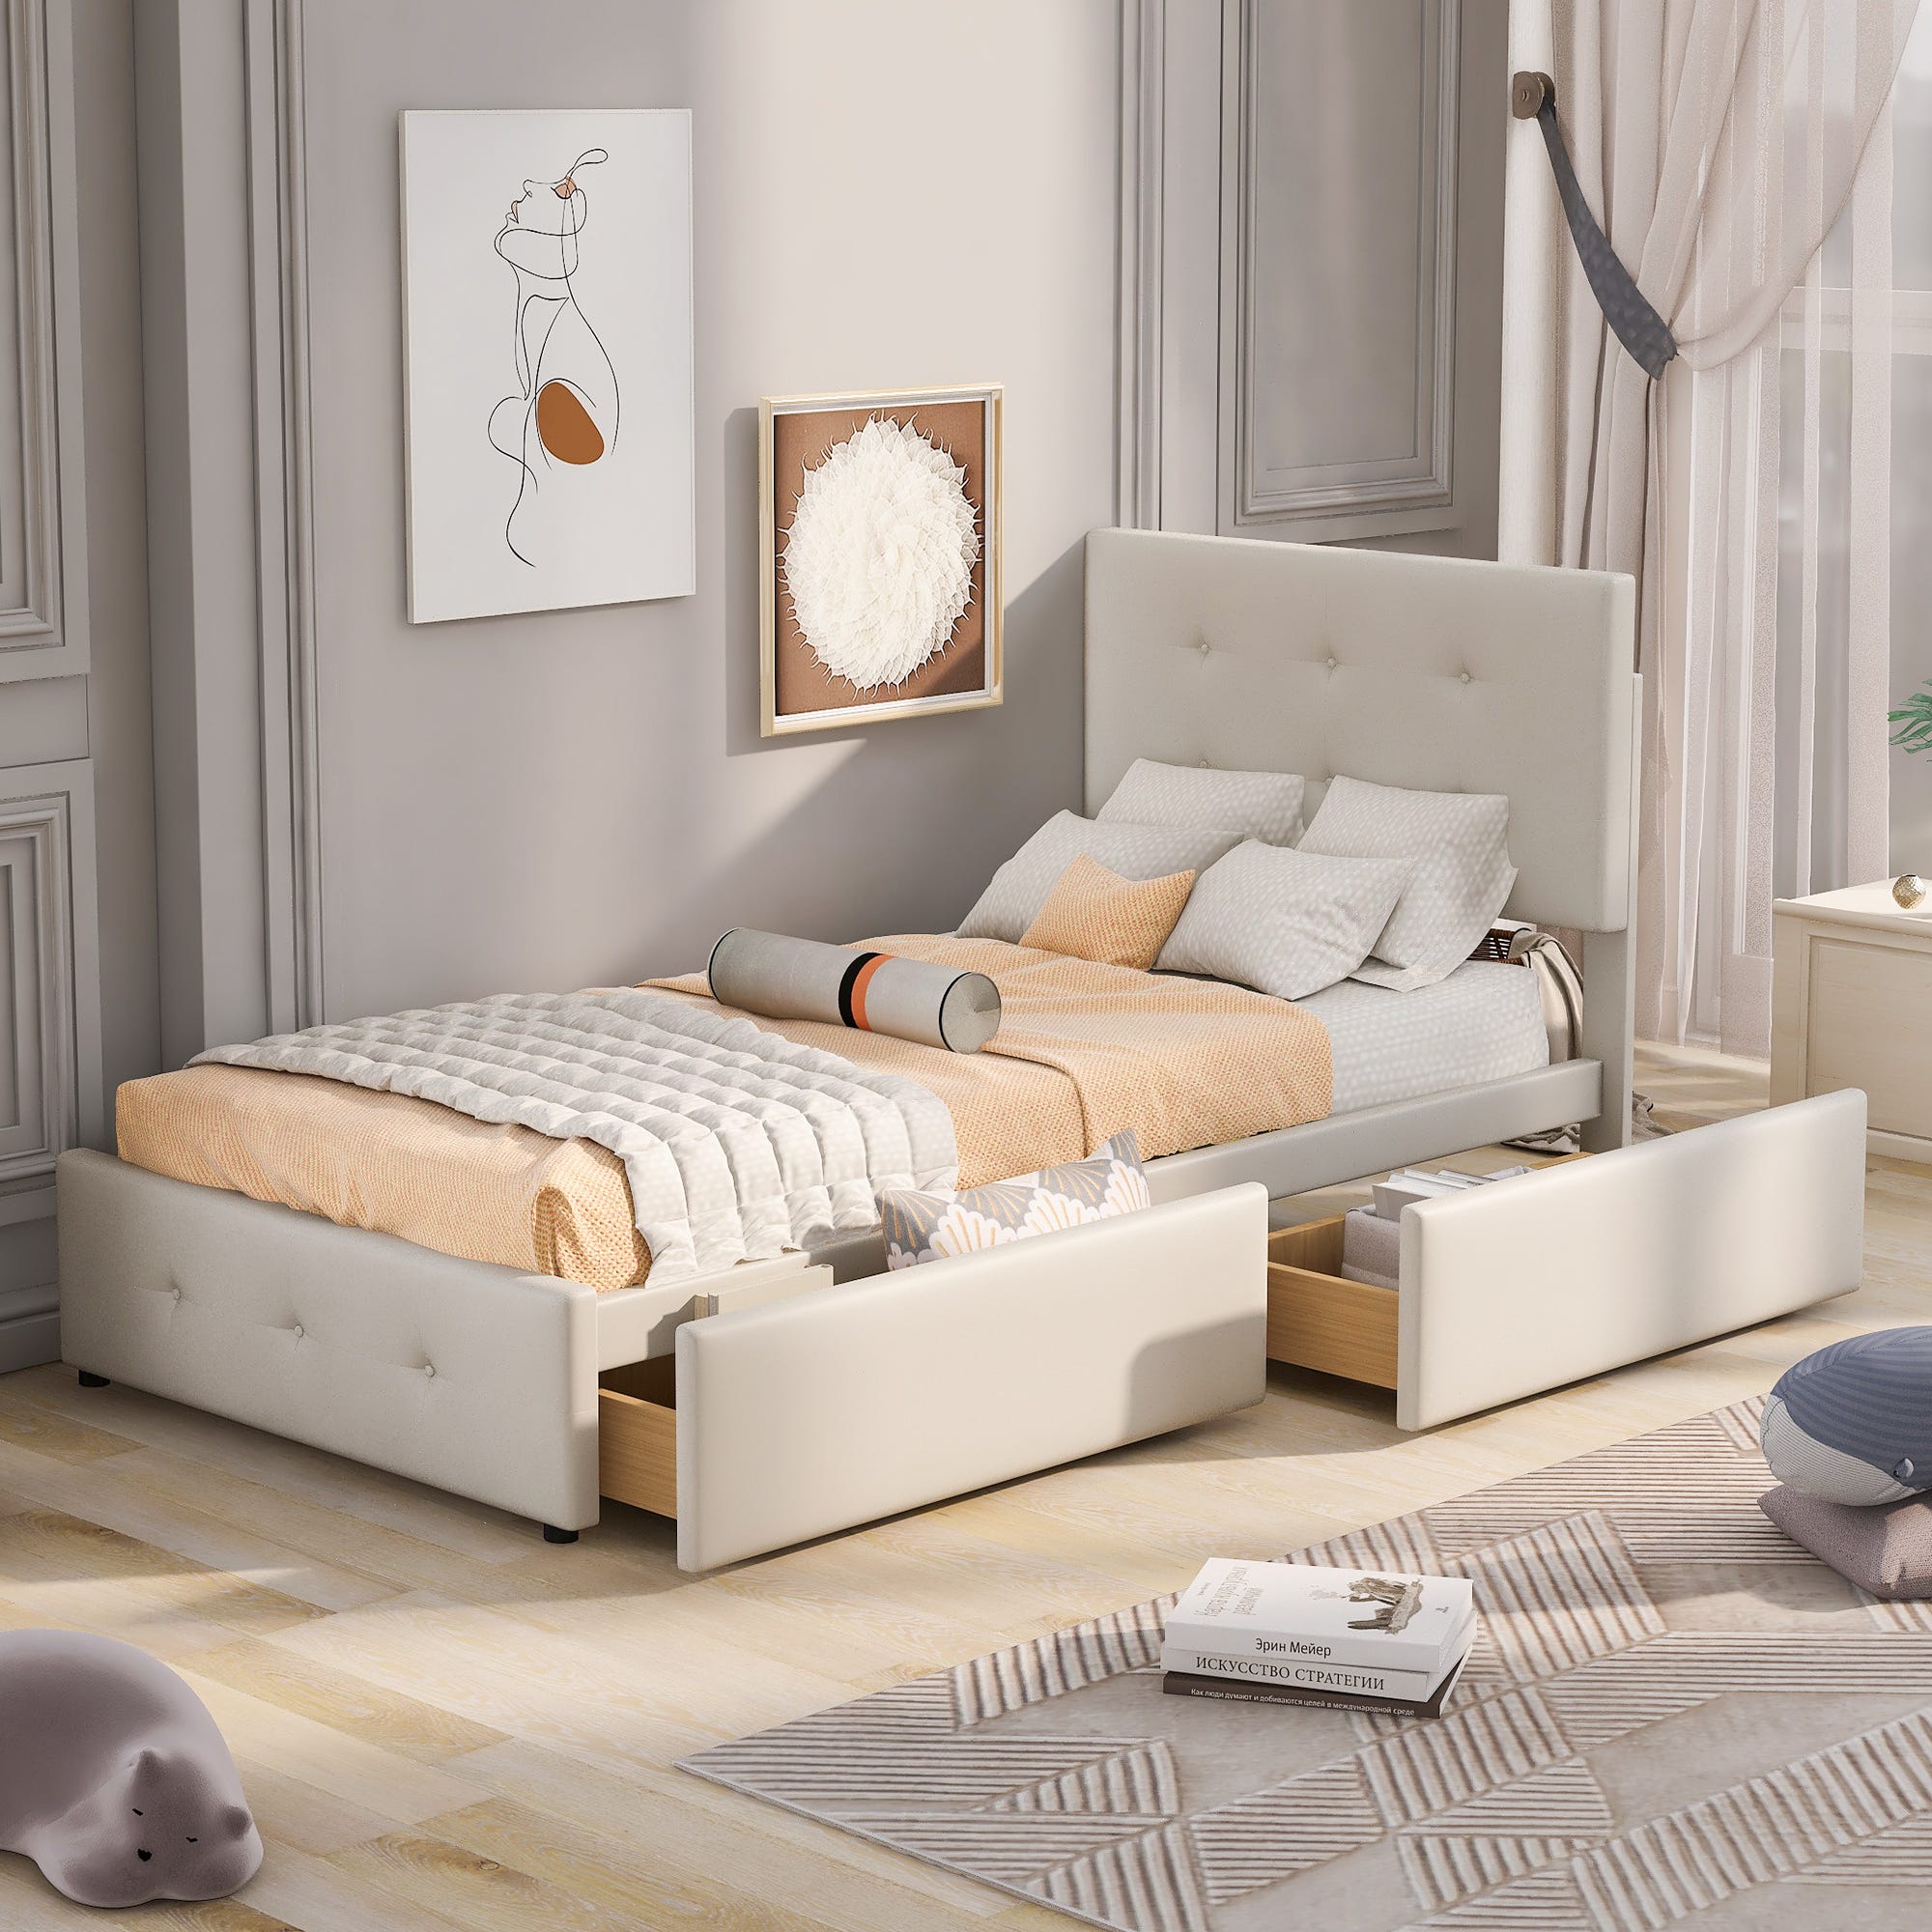 Mueble cama de 90 cm con o sin colchón